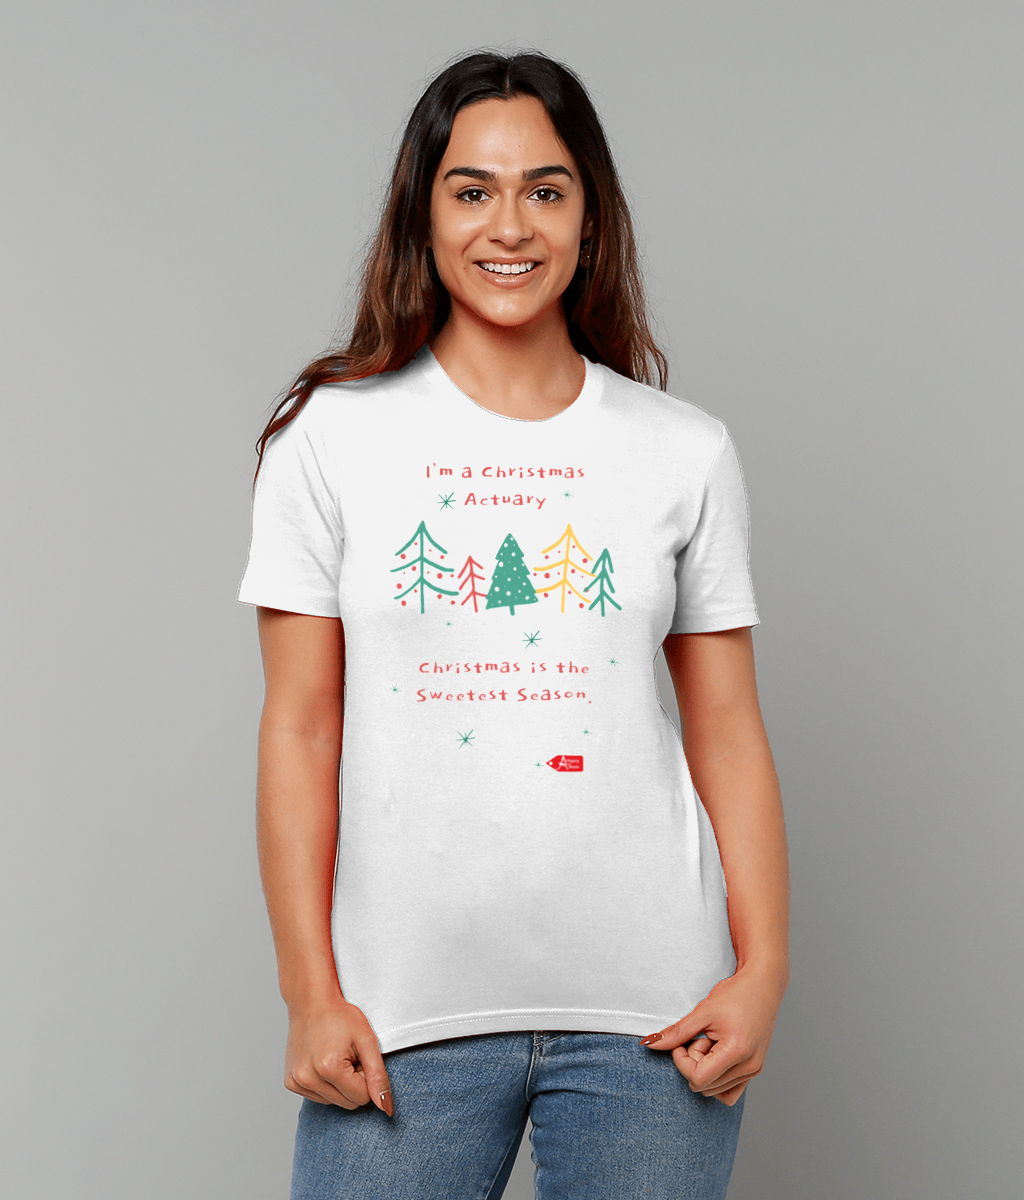 I'm a Christmas Actuary Christmas Is The Sweetest Season T-Shirt